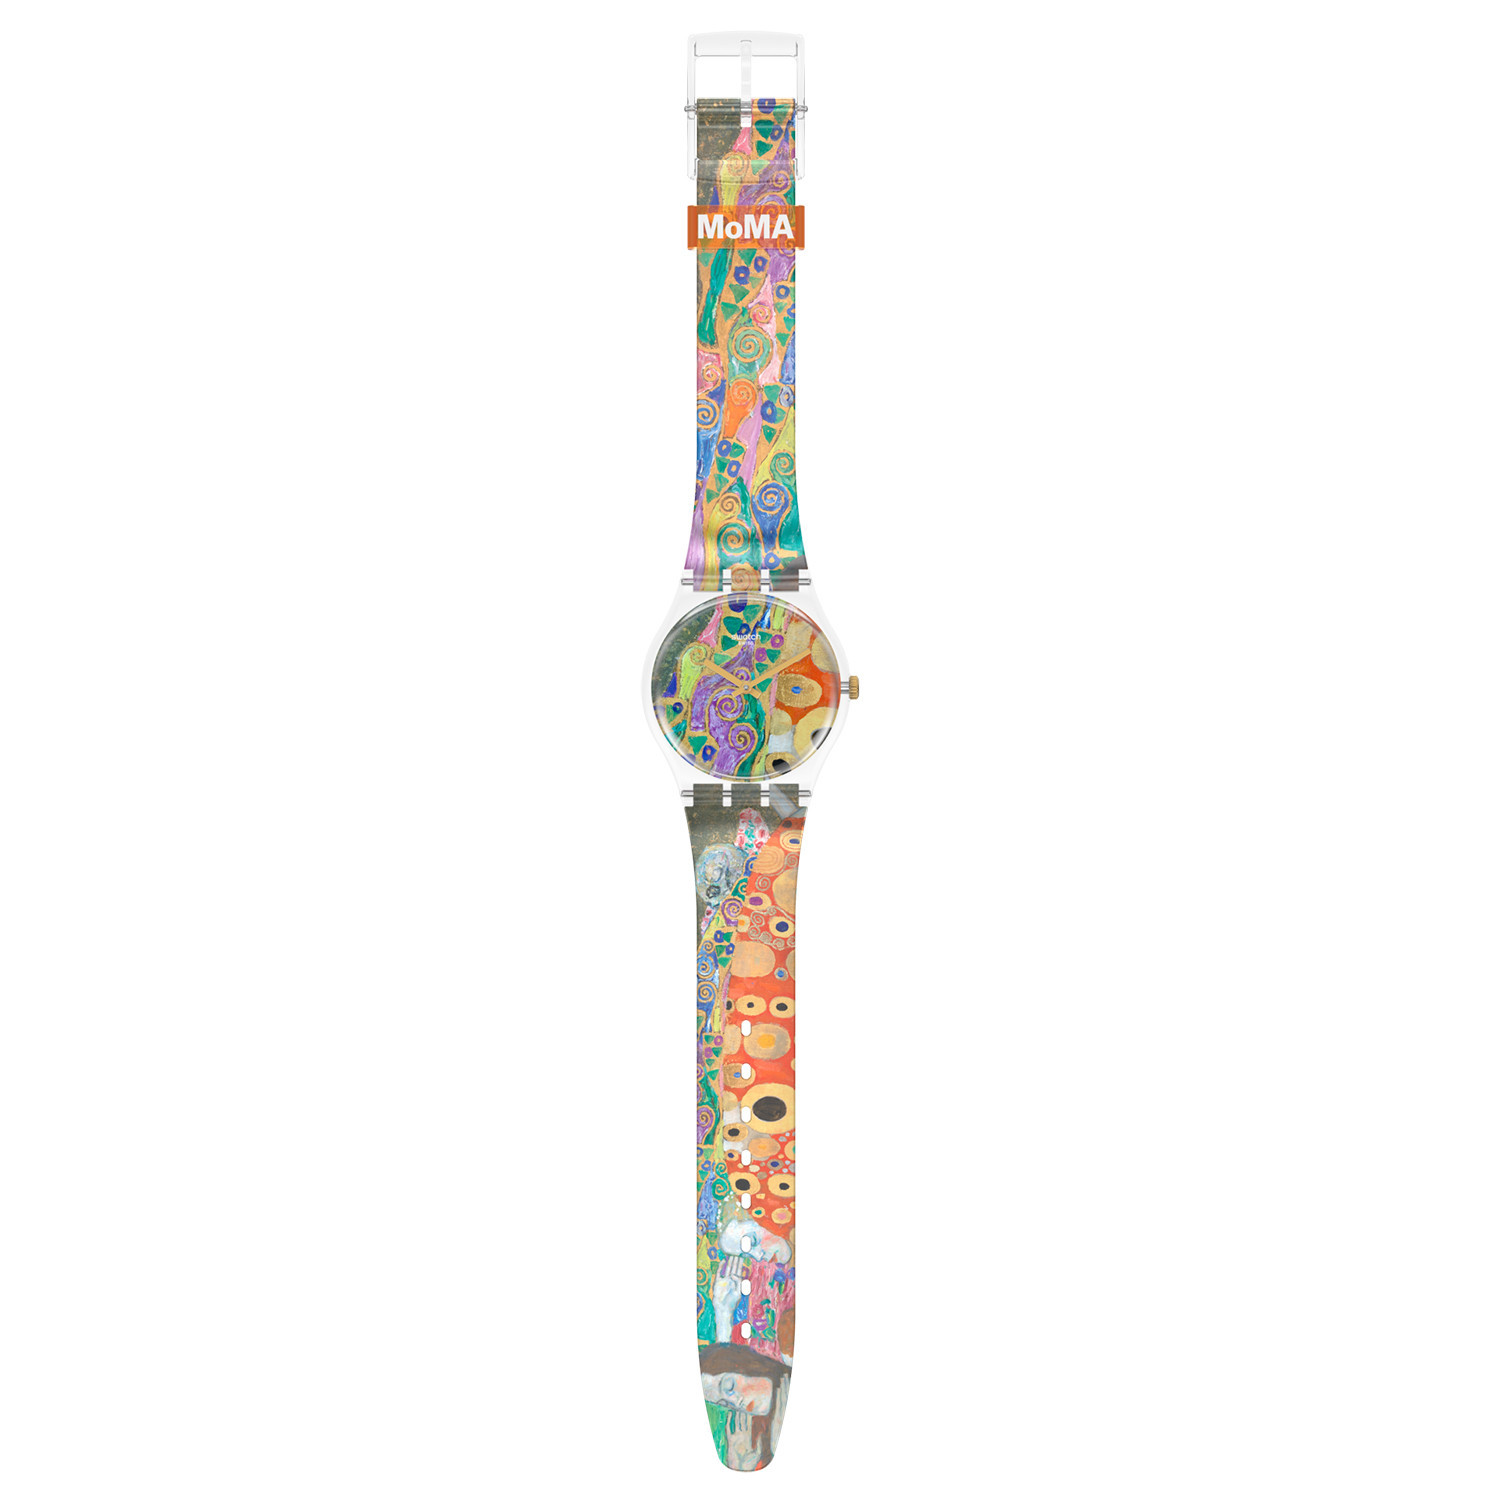 Montre femme Swatch Hope, II By Gustav Klimt
Moma